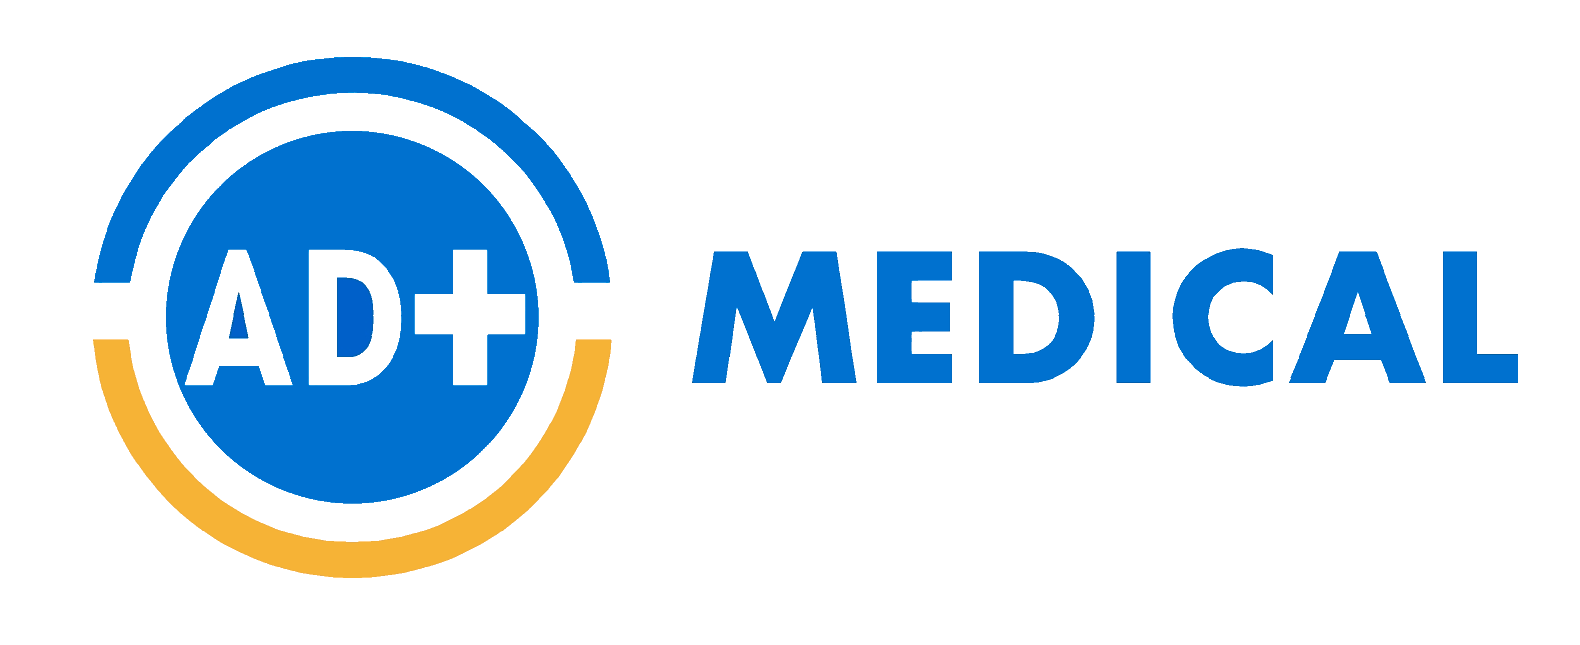 AD+ Medical